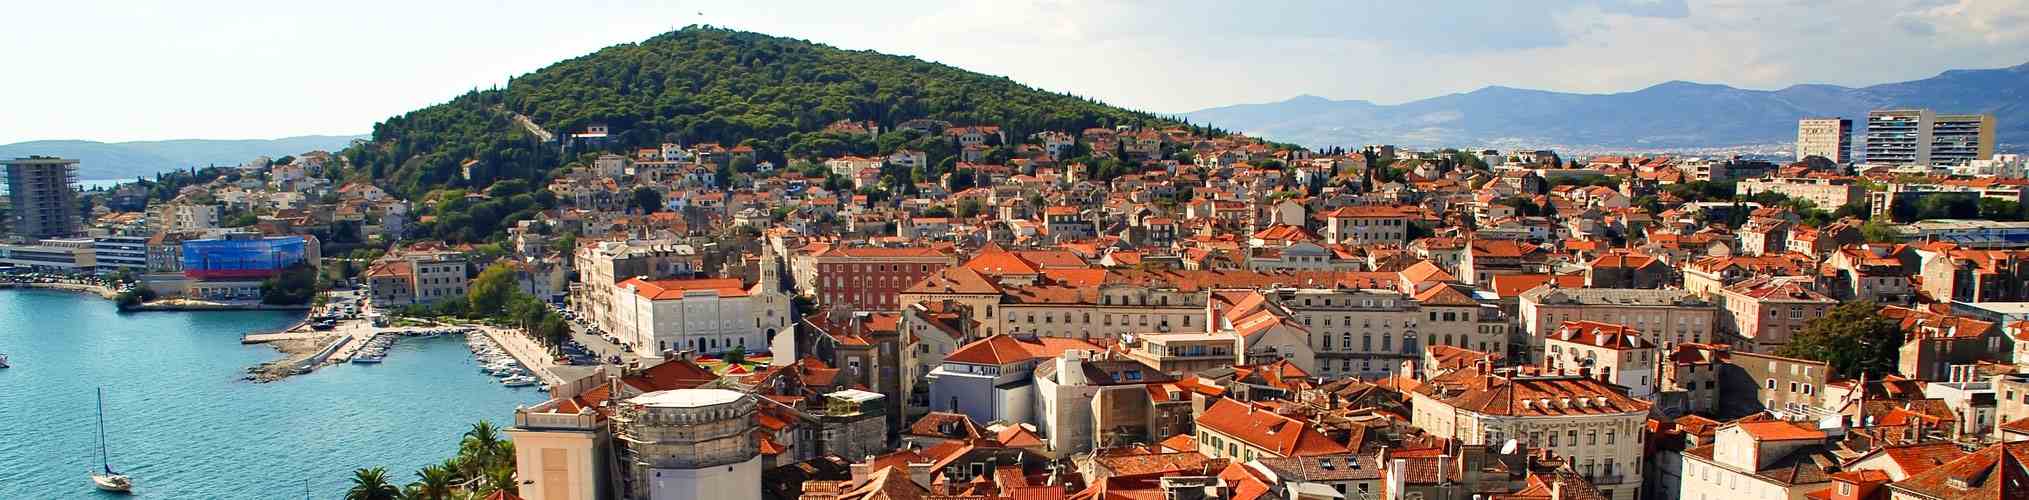 Spalato, Croazia: veduta panoramica